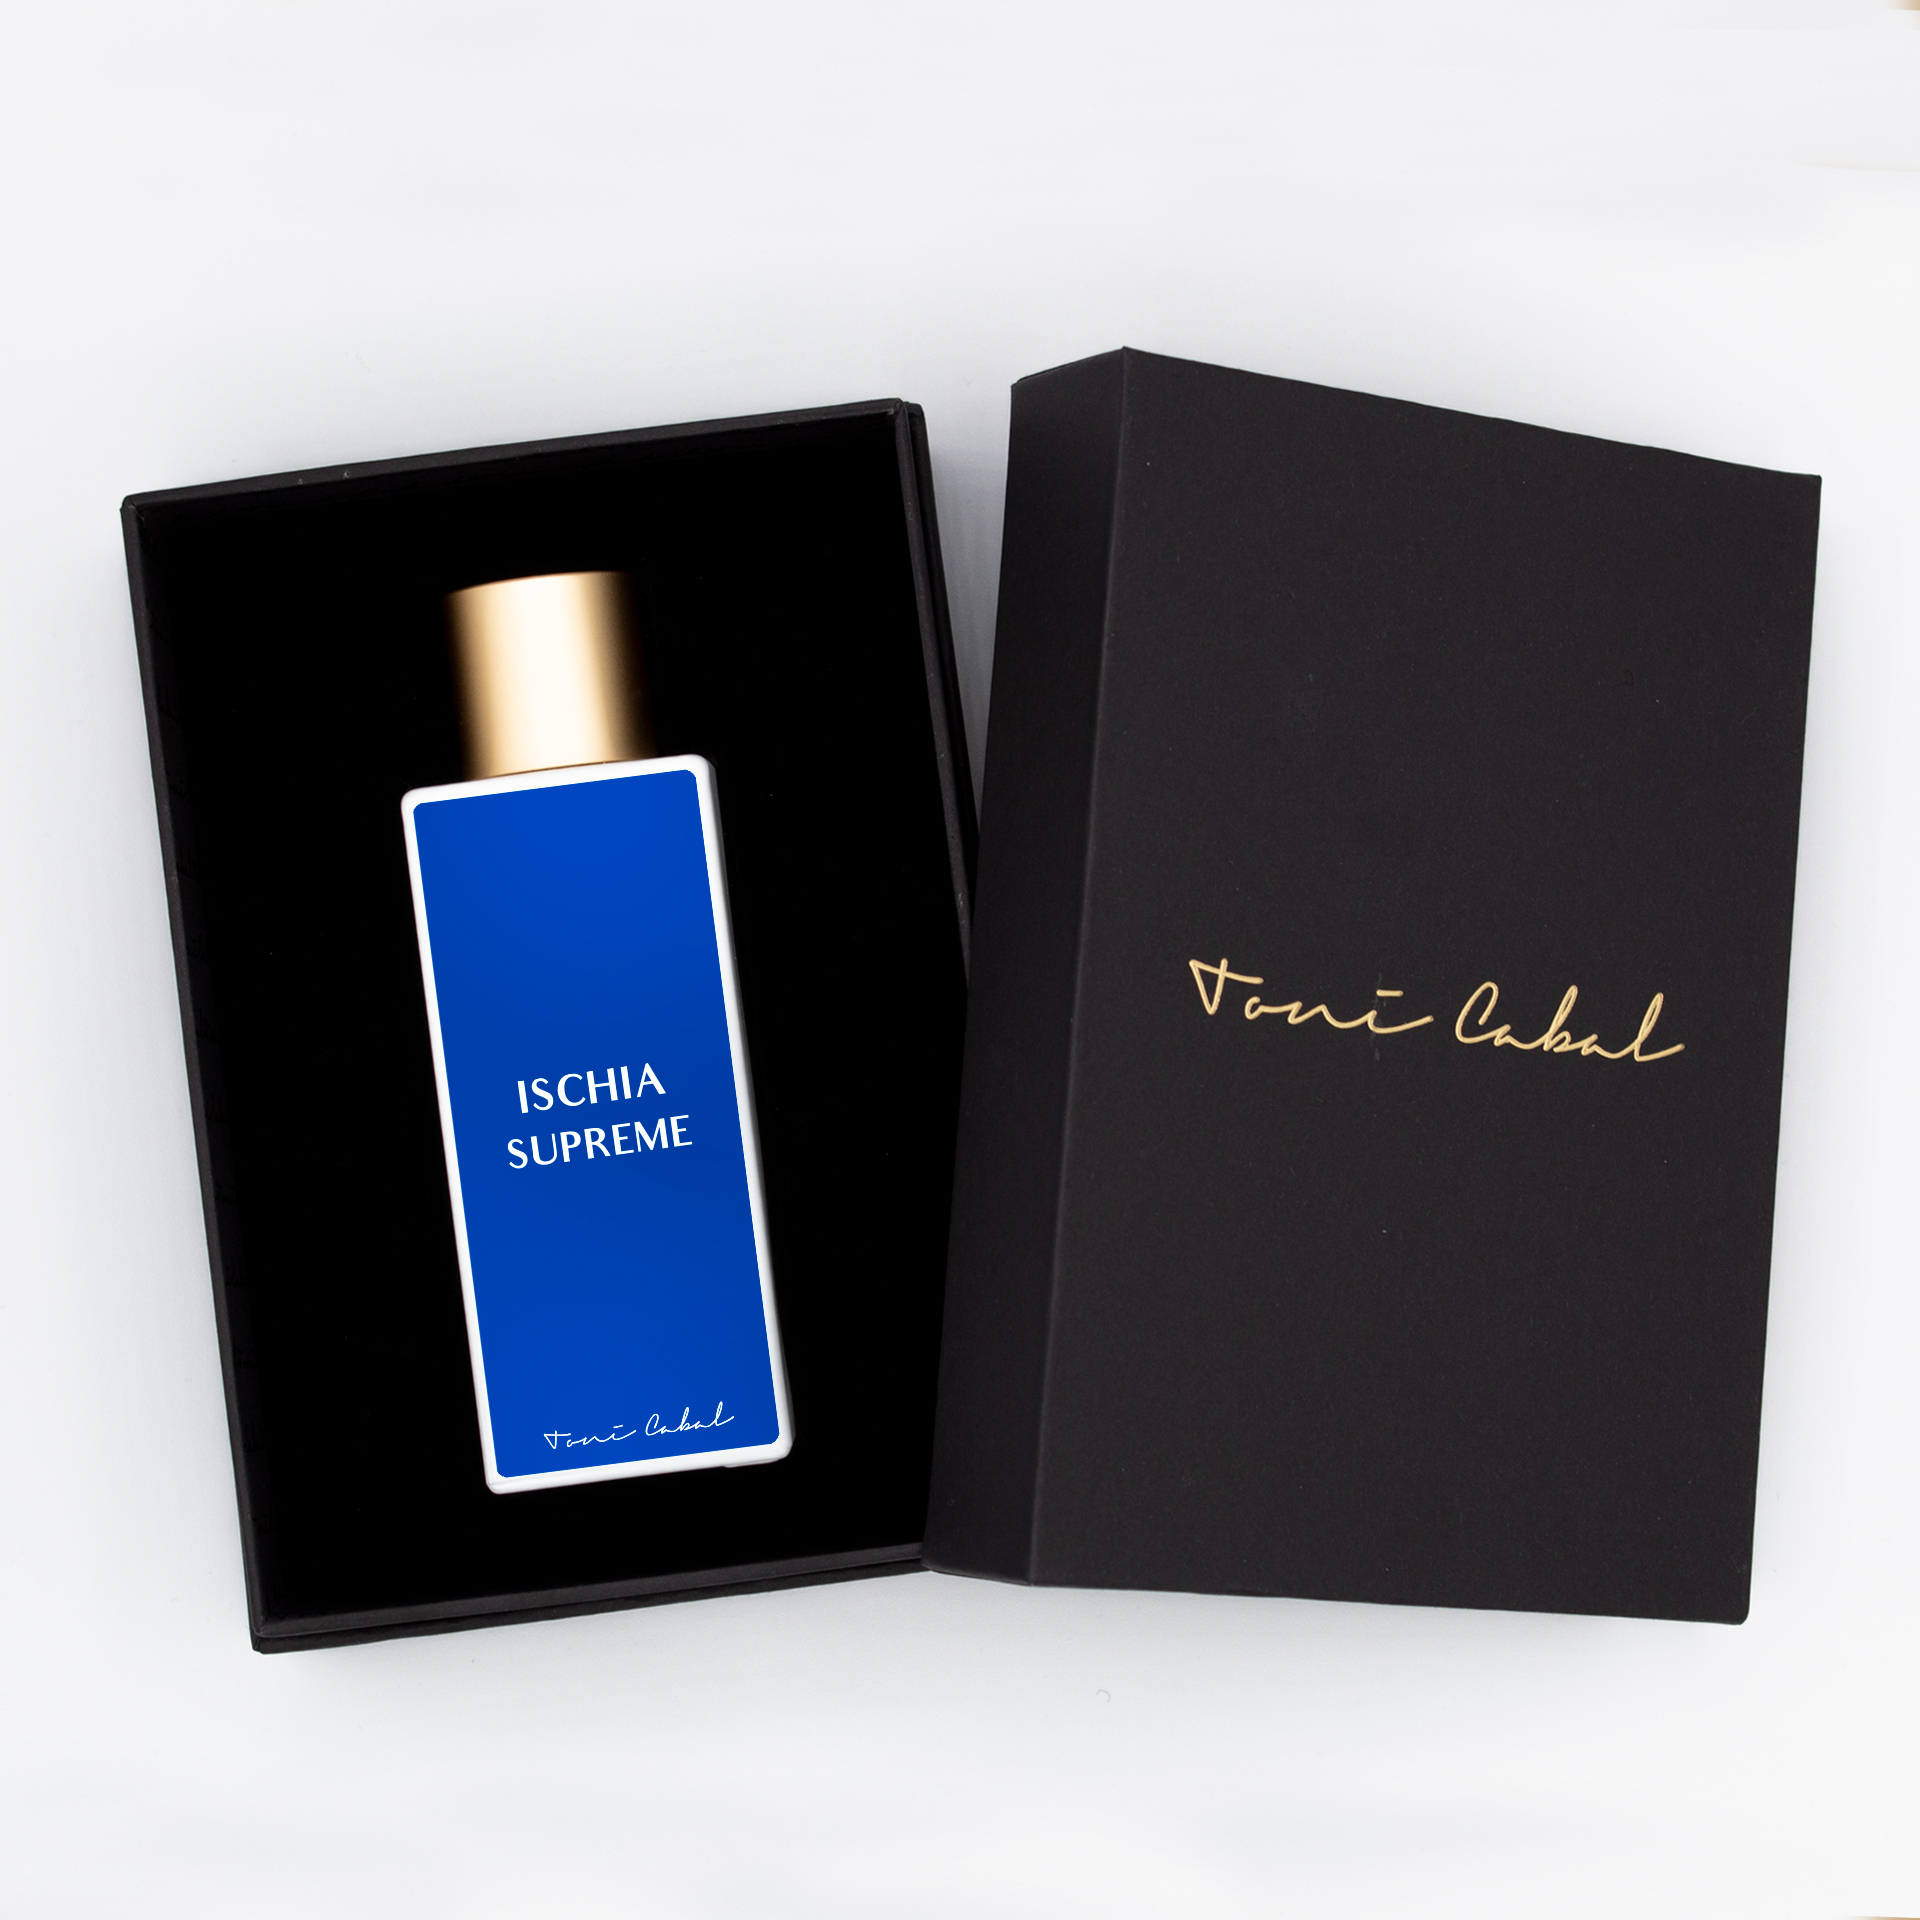 ischia supreme 100ml toni cabal daring light perfumes niche barcelona